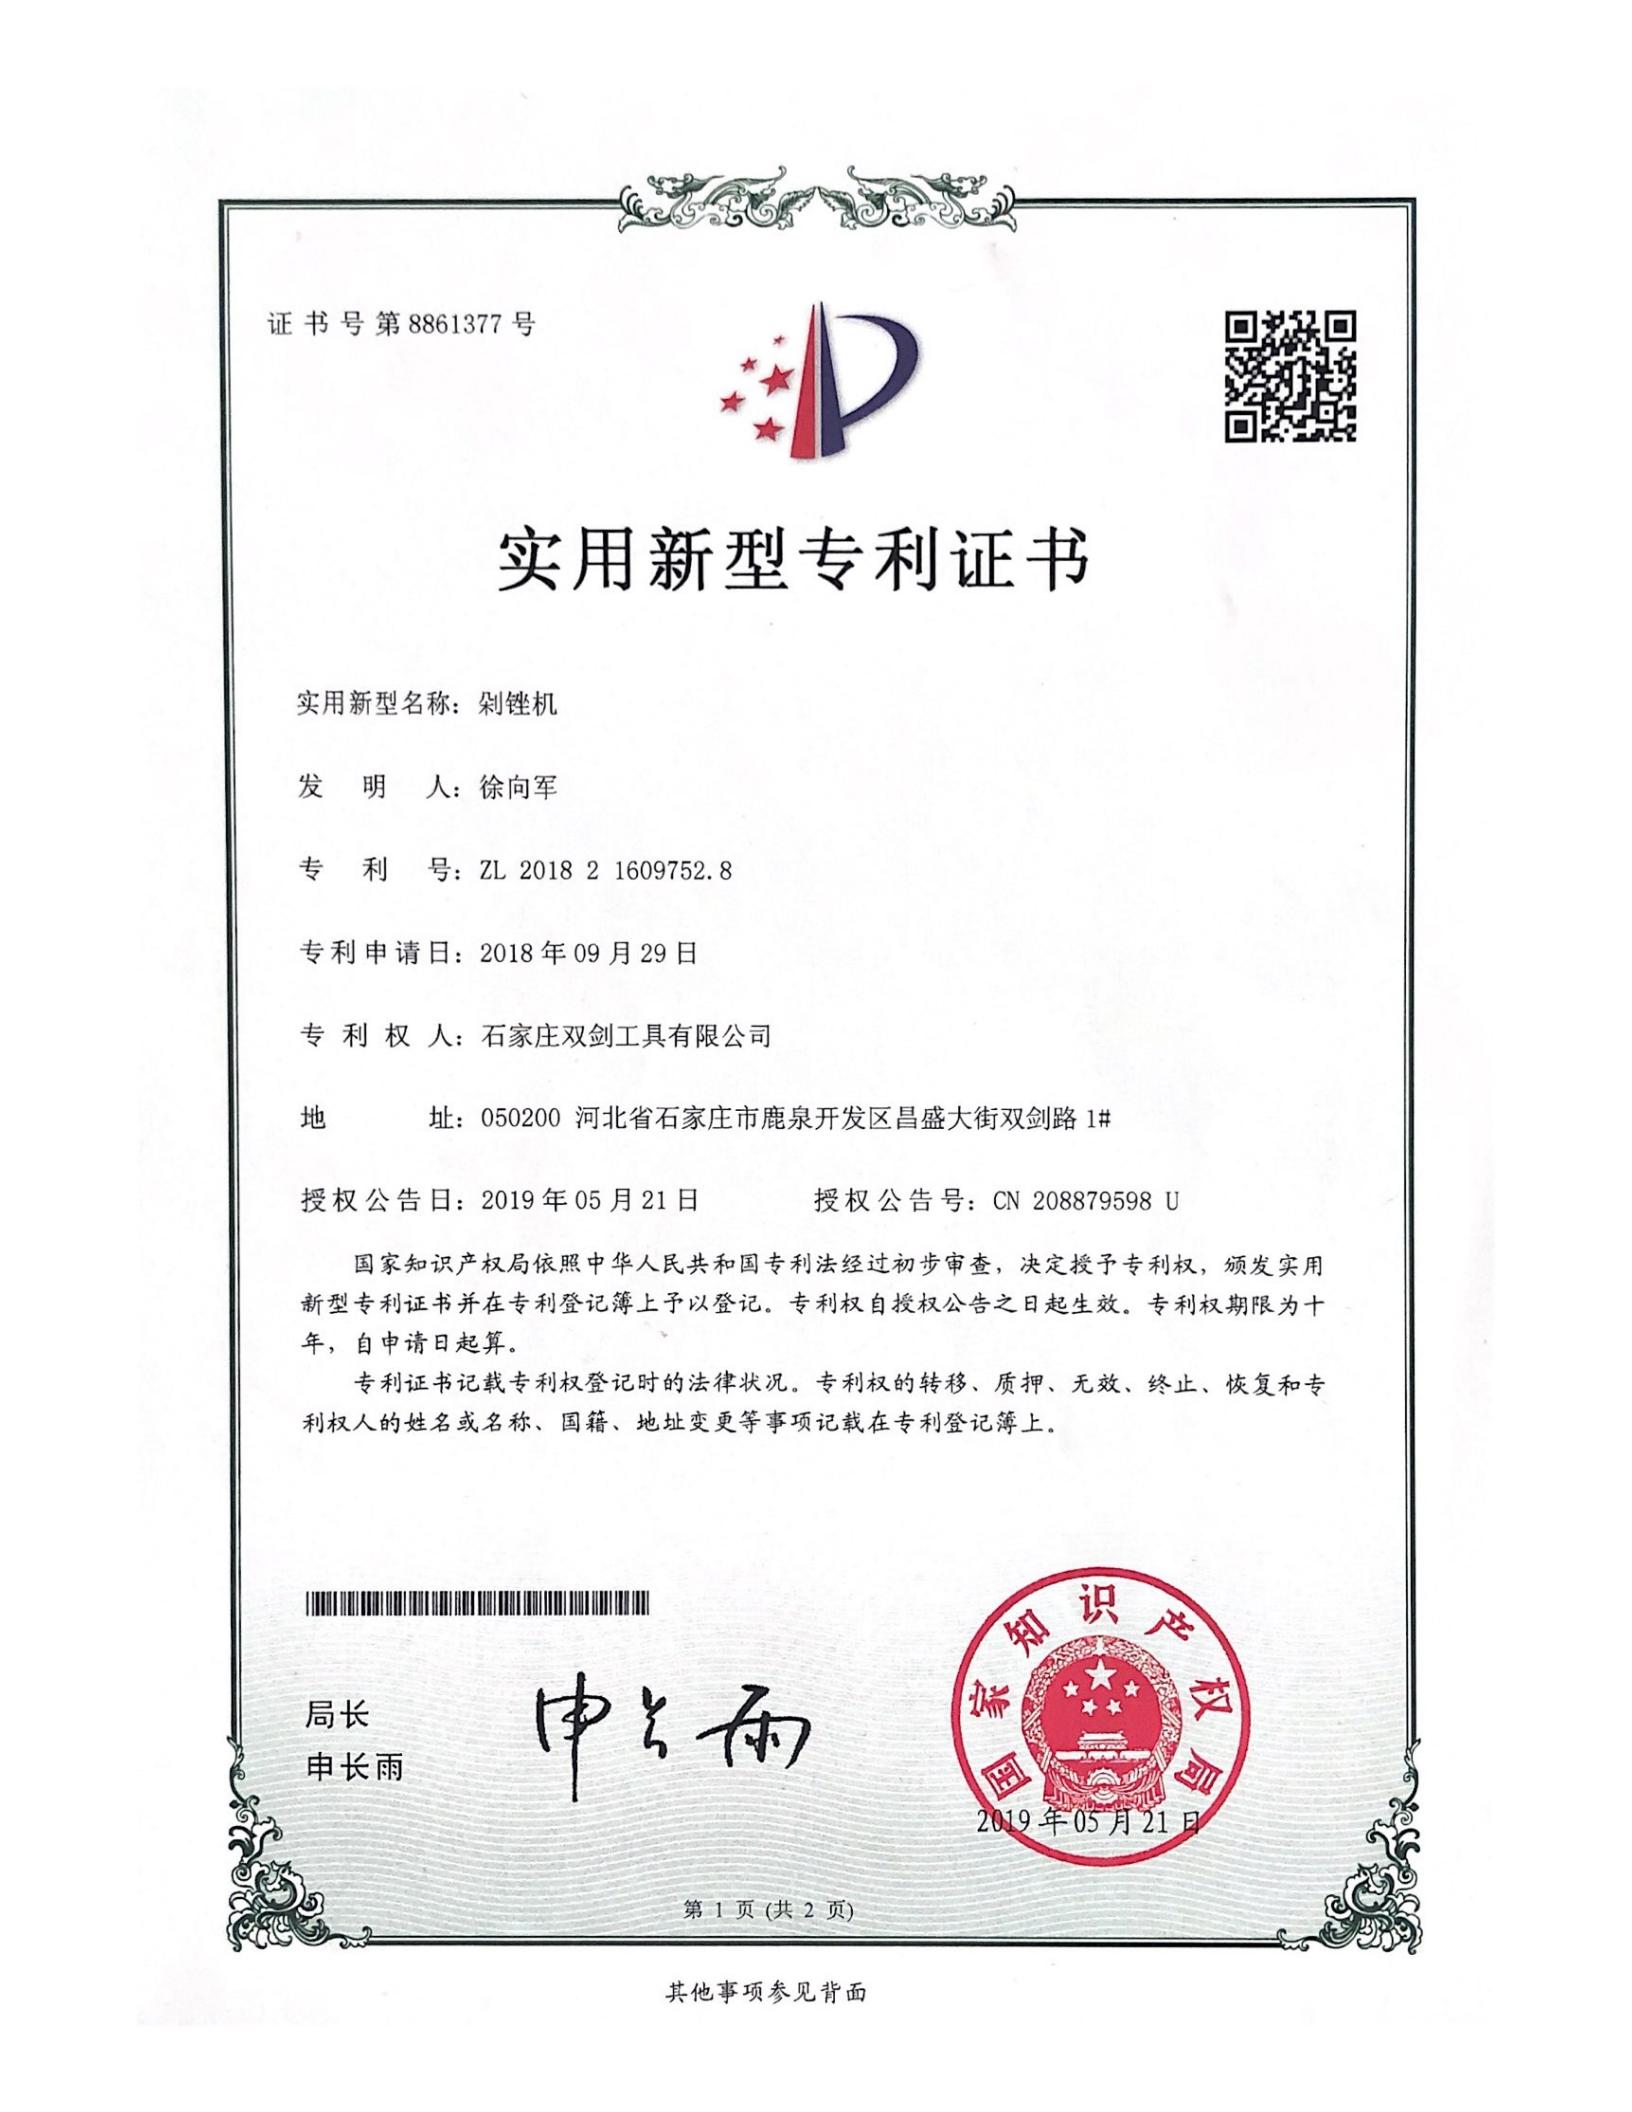 Utility Model Patent Certificate No. 8861377